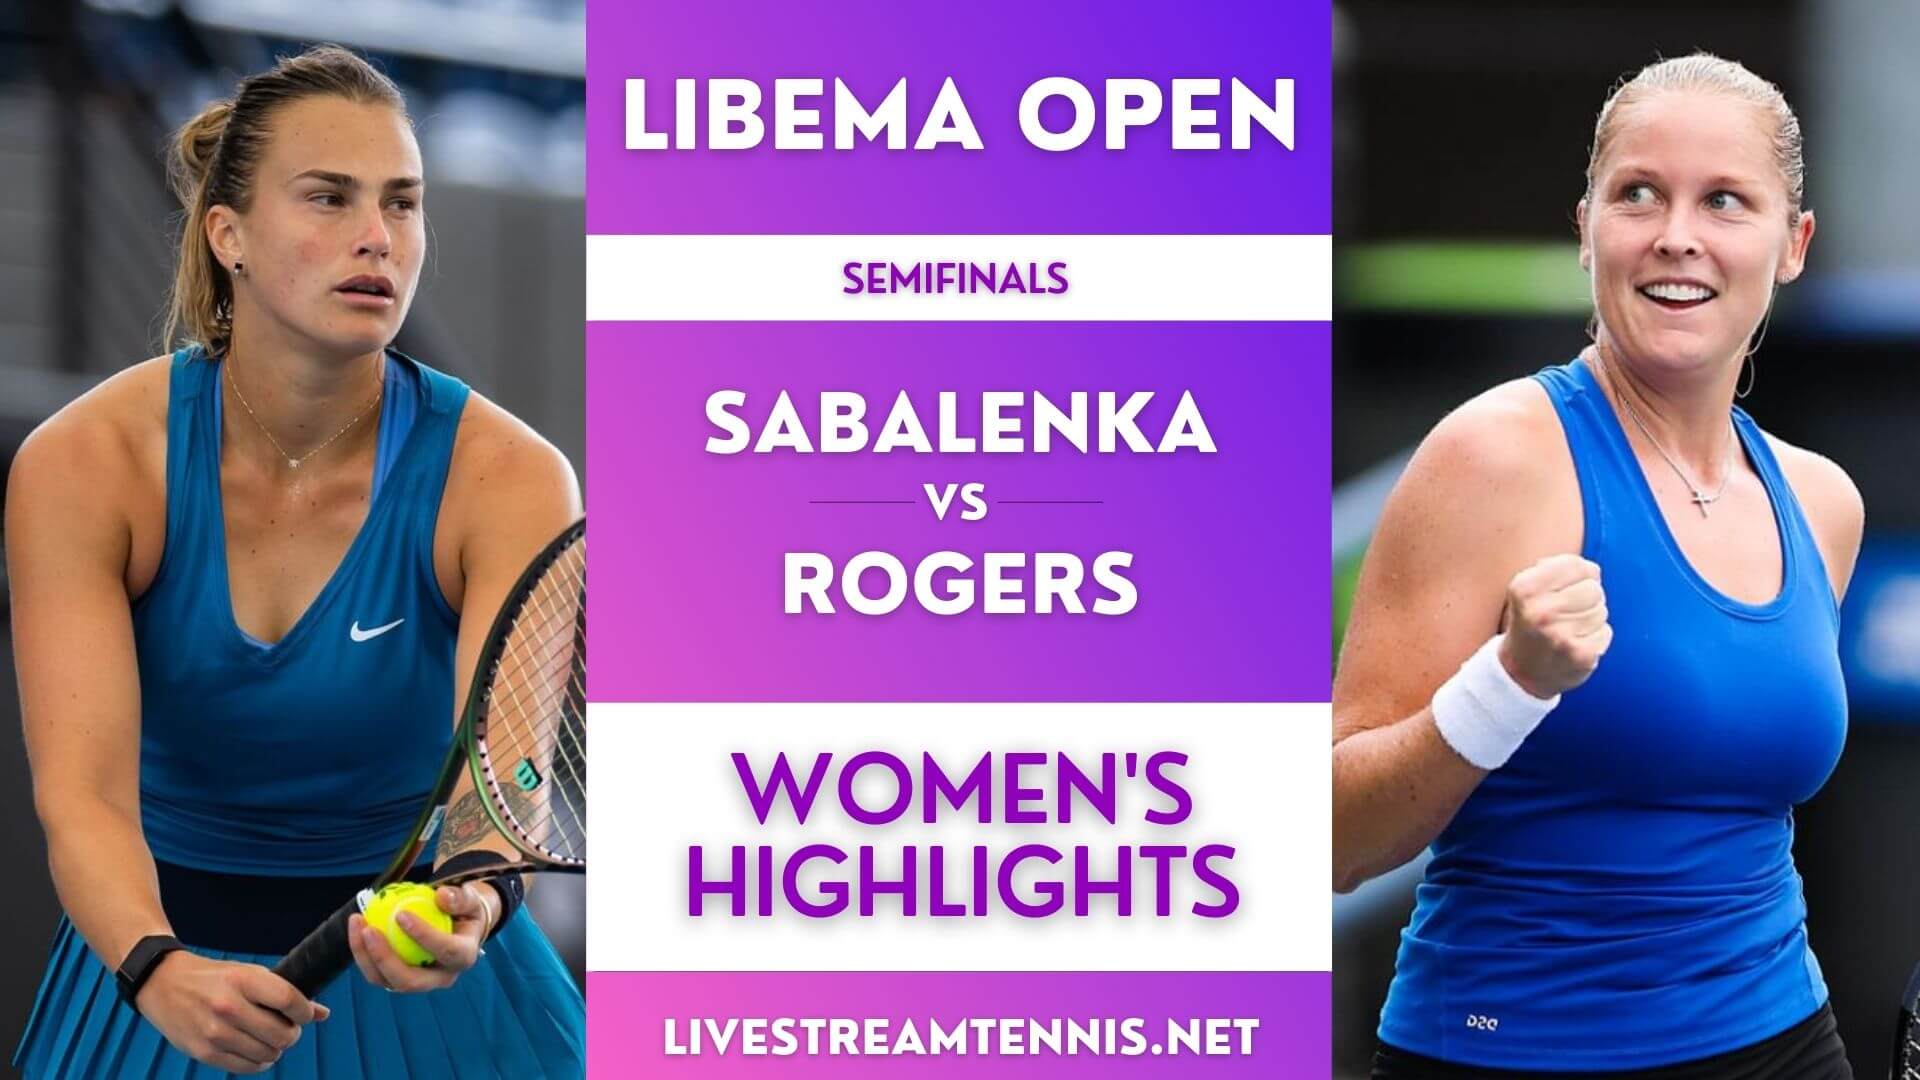 Libema Open Ladies Semifinal 1 Highlights 2022